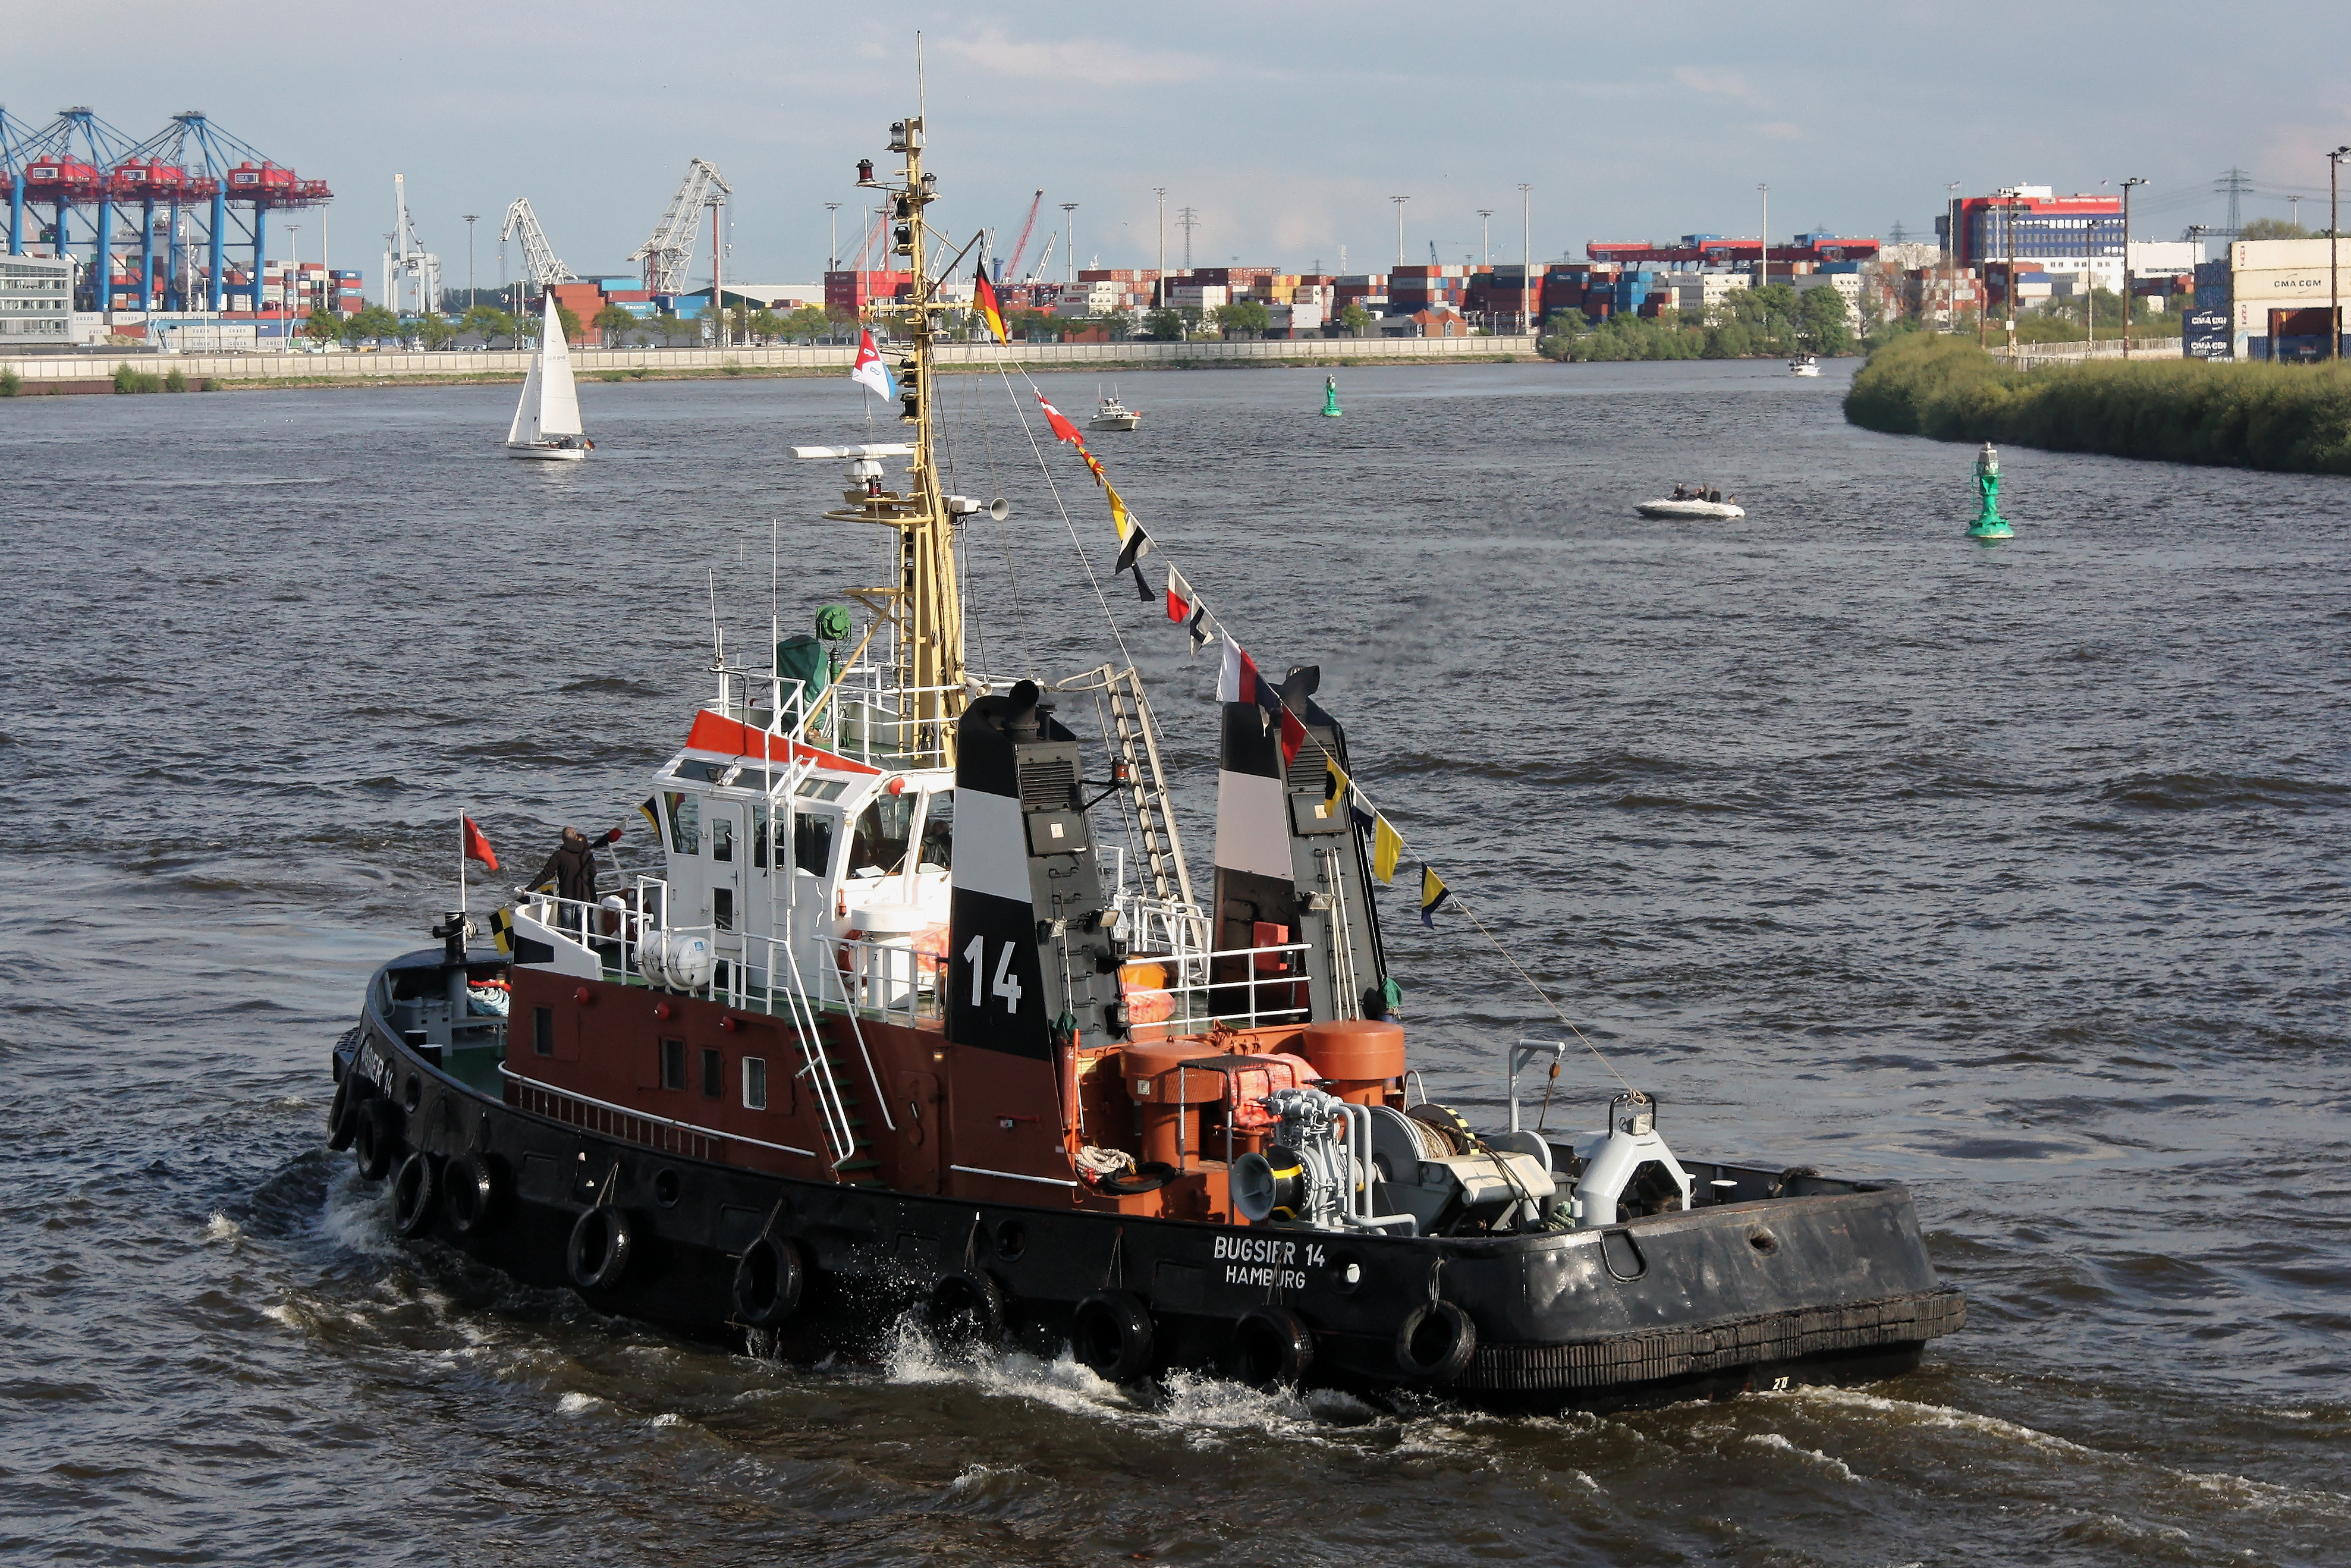 Tugboat Bugsier 14 in port of Hamburg